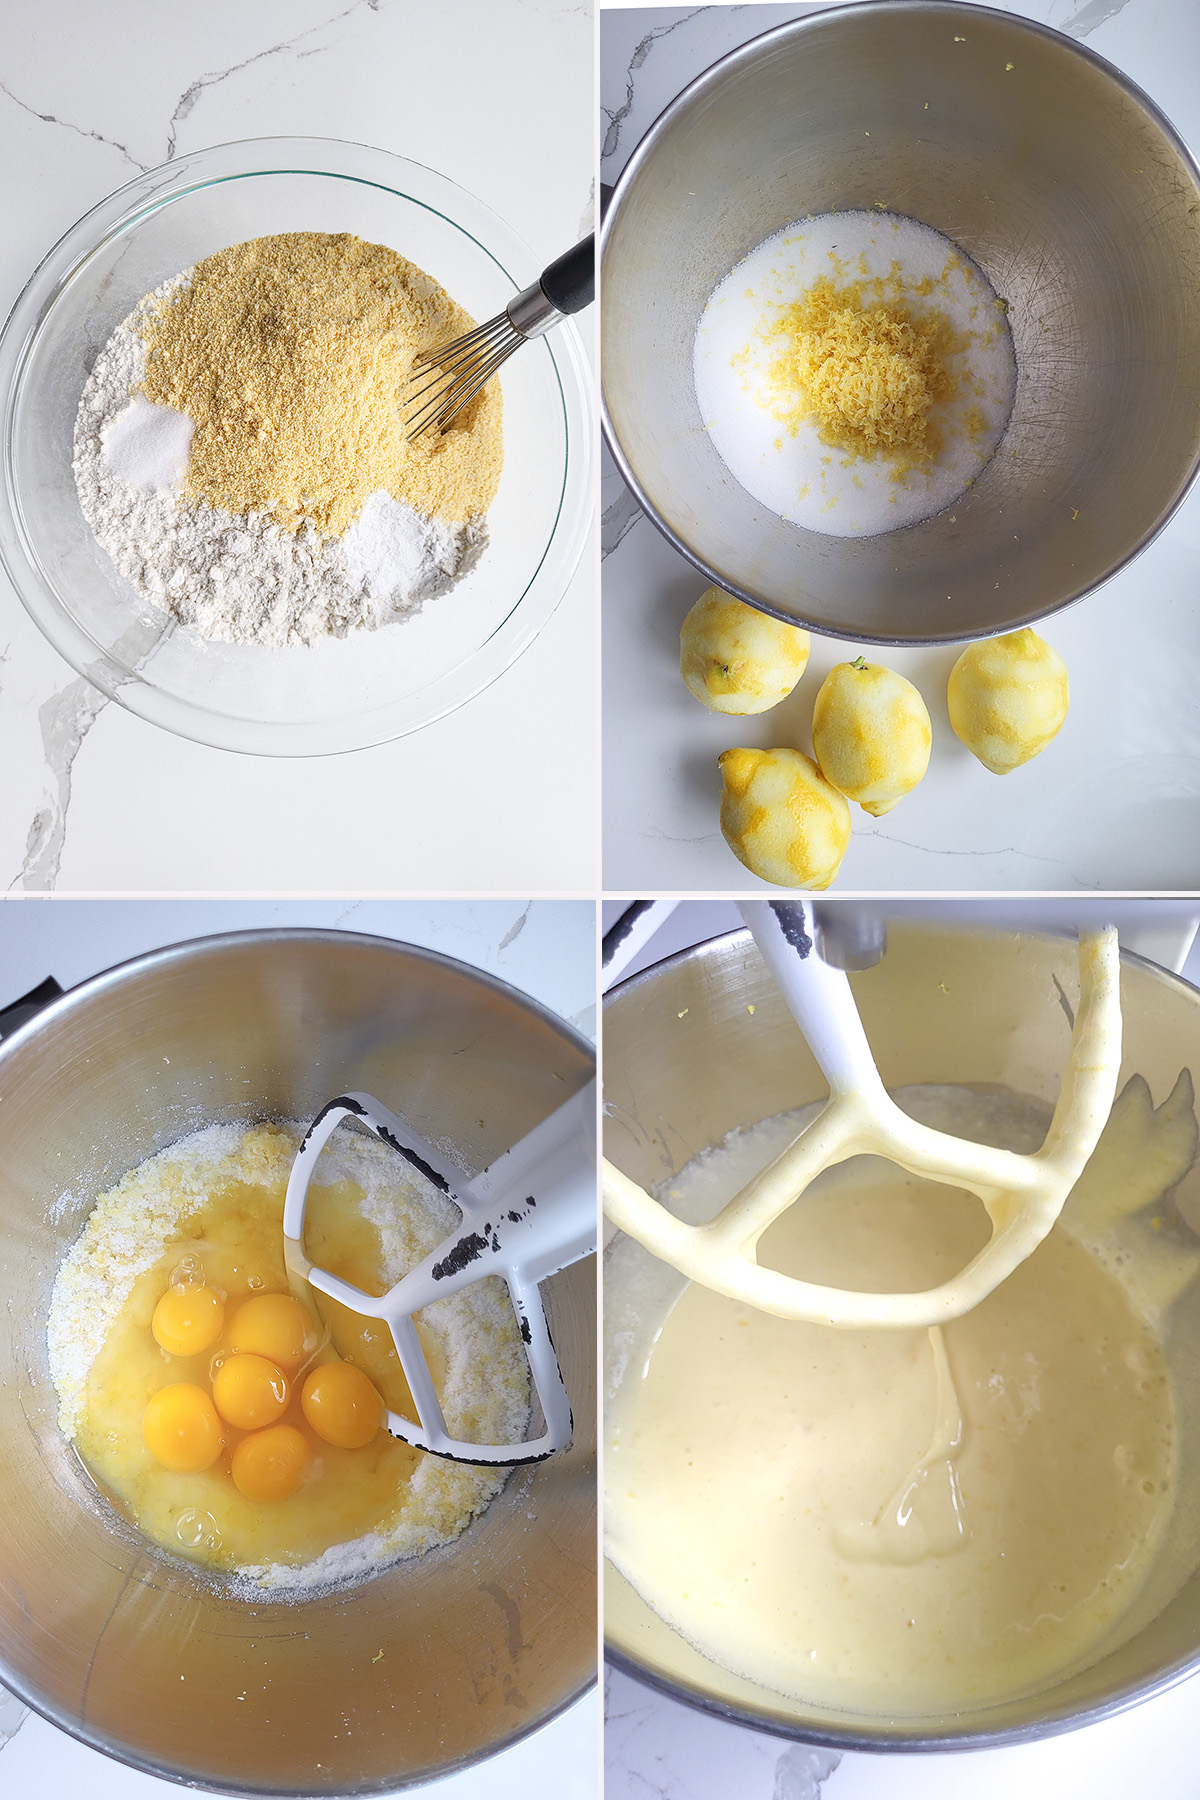 dry cake ingredients in a bowl. Sugar and lemon zest in a bowl. Eggs and cake batter in a bowl.